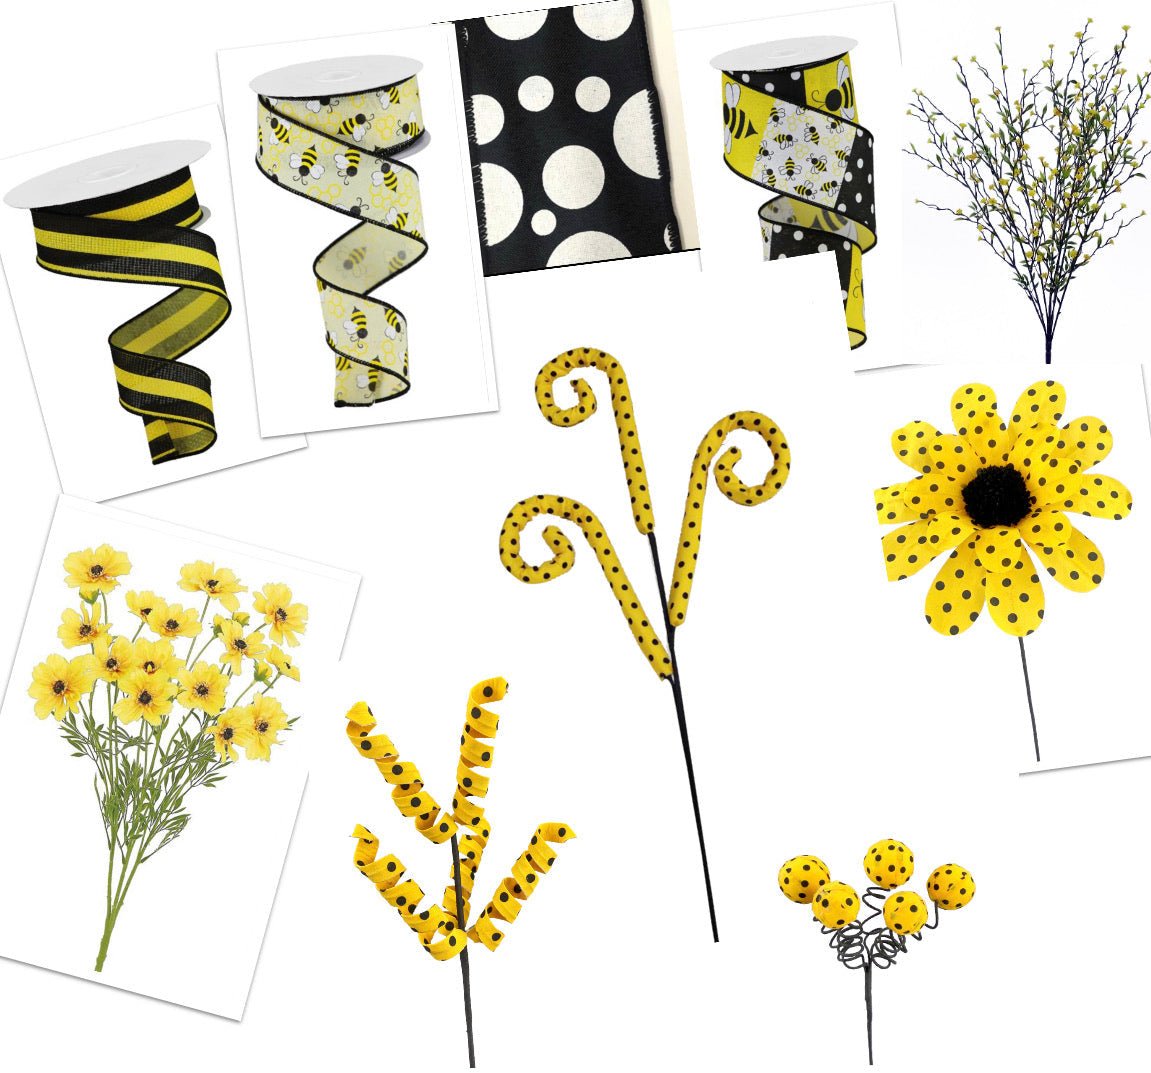 Yellow and black polka dotted flower spray - Greenery MarketPicks62814YWBK